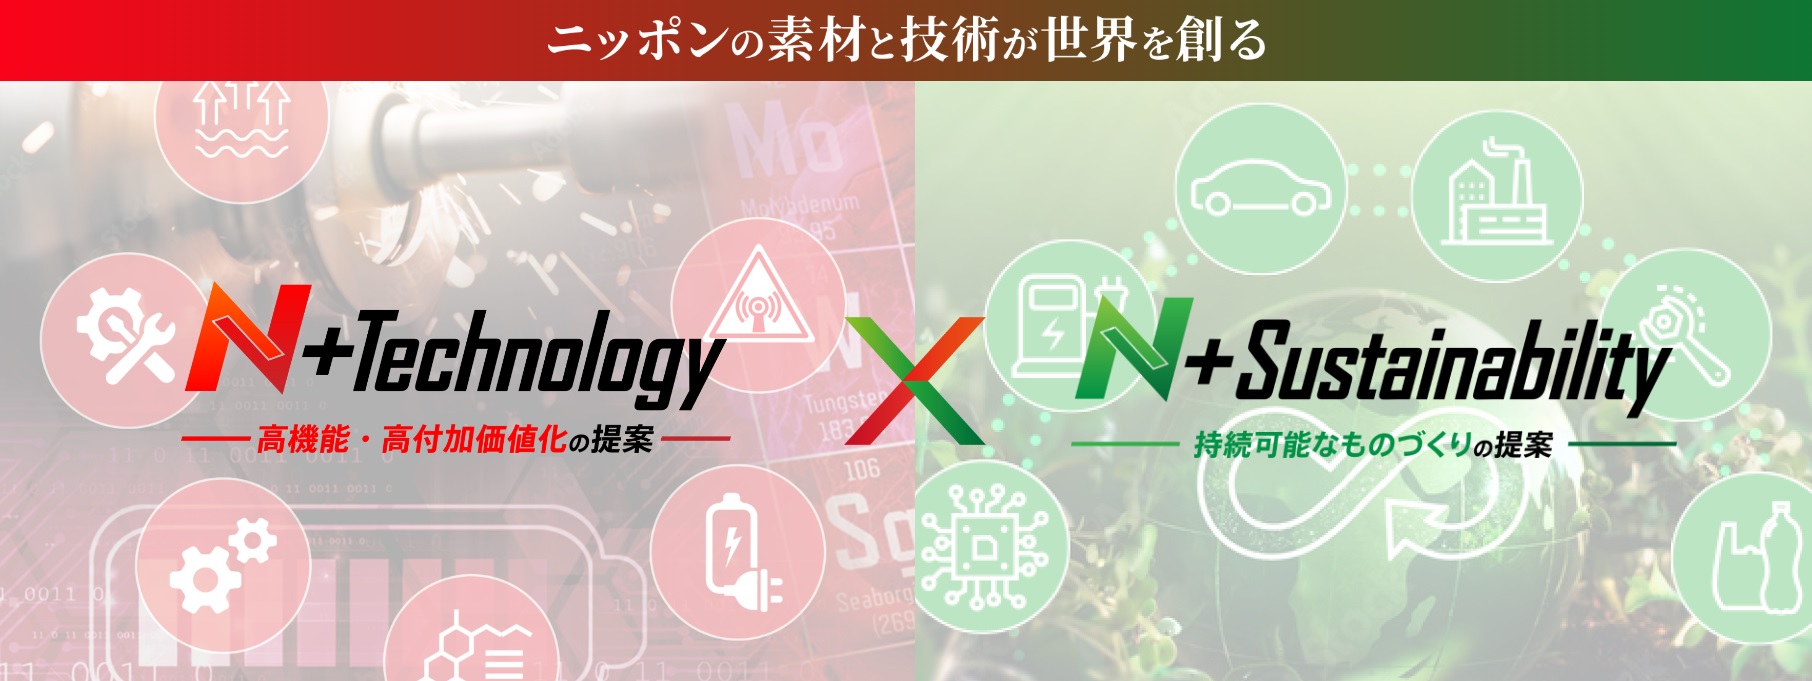 N-PLUS（エヌプラス）「New」「Next」をプラスする製品開発技術展